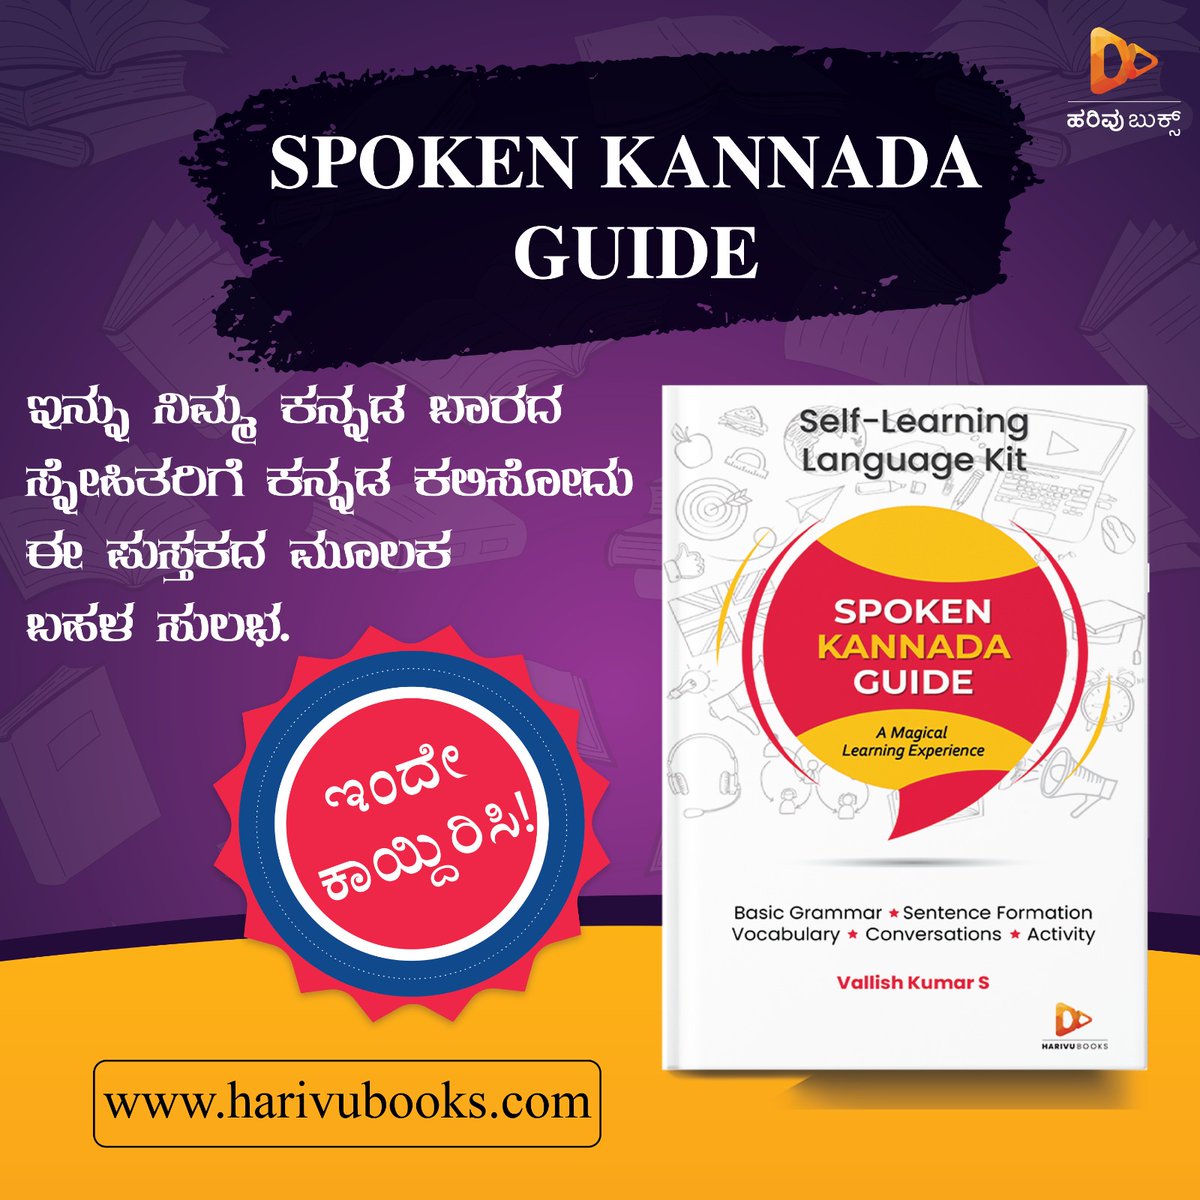 Our approachable 'Spoken Kannada Guide' book makes learning Kannada simple. Click here to preorder your copy.
harivubooks.com/products/spoke…

#spokenkannadaguide #vallishkumarS #kannada #nonkannada #kannadiga #nonkannadiga #harivubooks #harivupublication